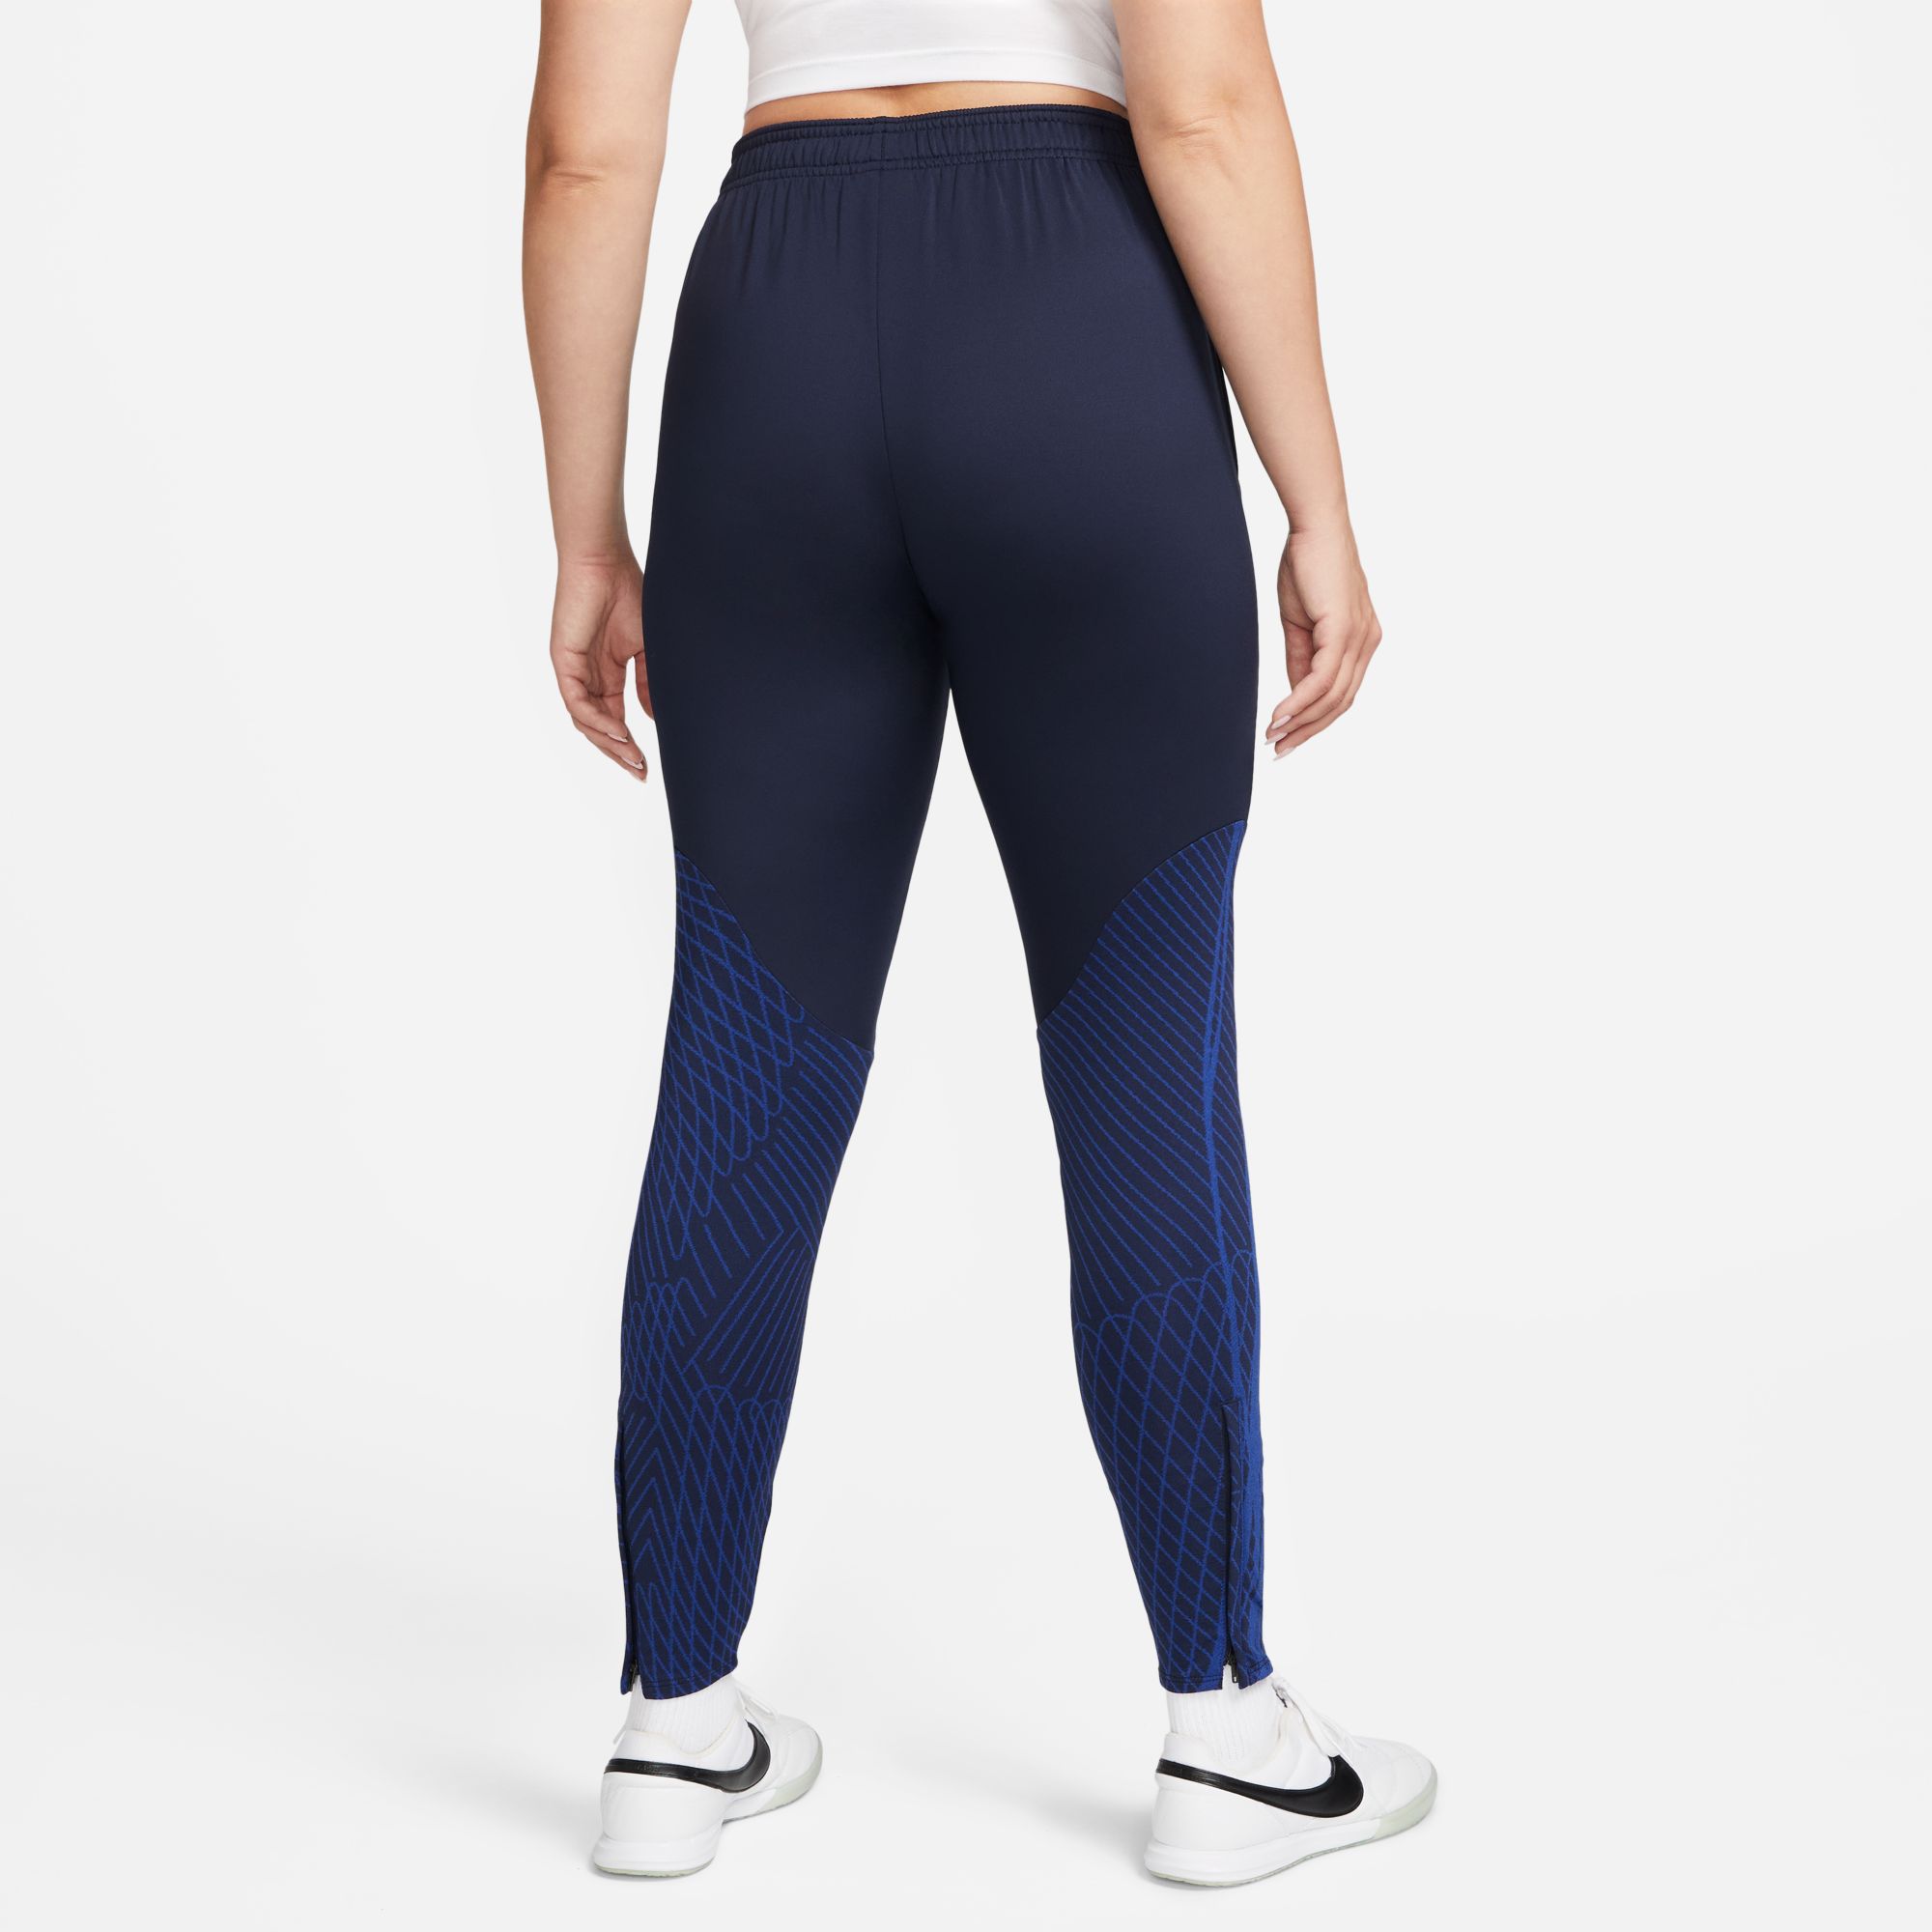 Blue Paris Saint-Germain Trousers & Tights. Nike CA